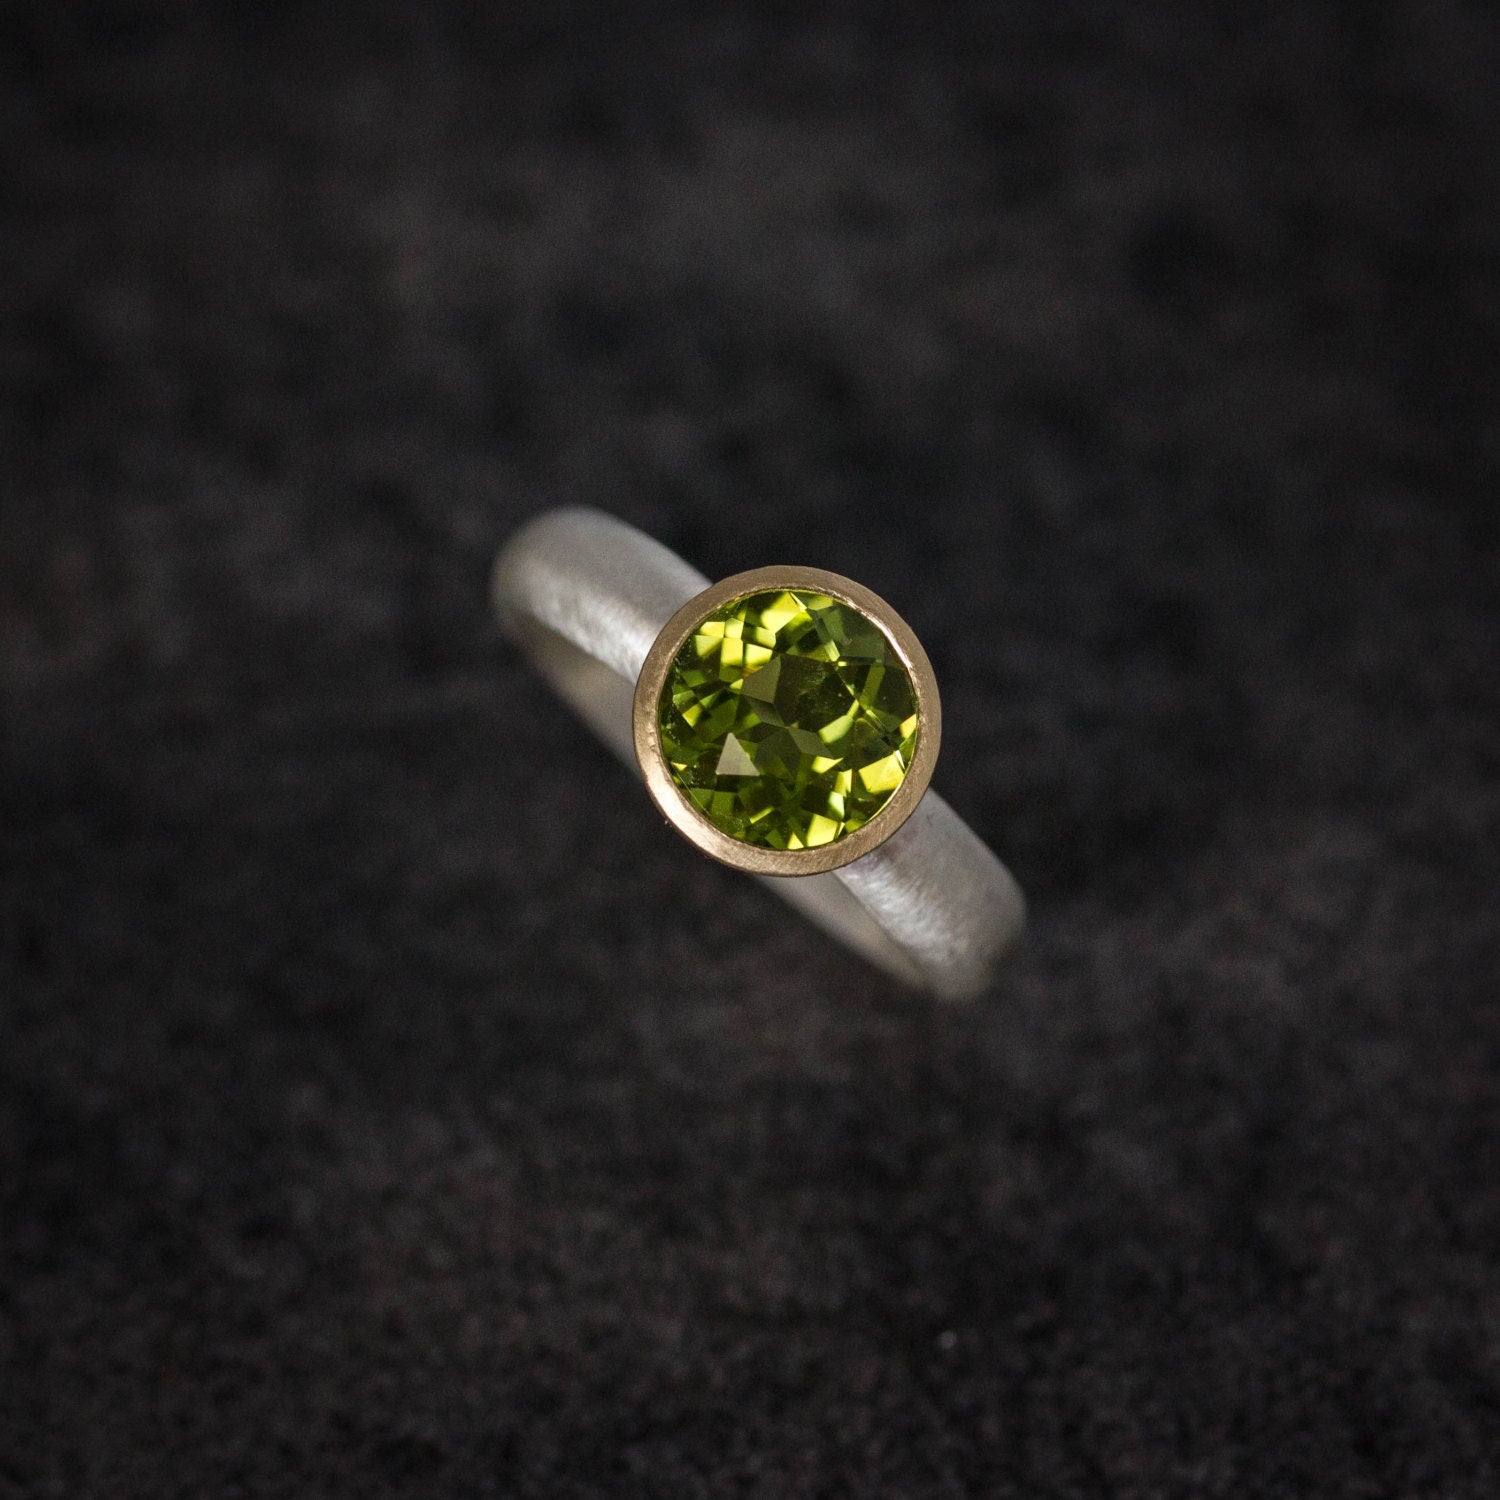 A Handmade Peridot Gemstone Ring with Cassin Jewelry.